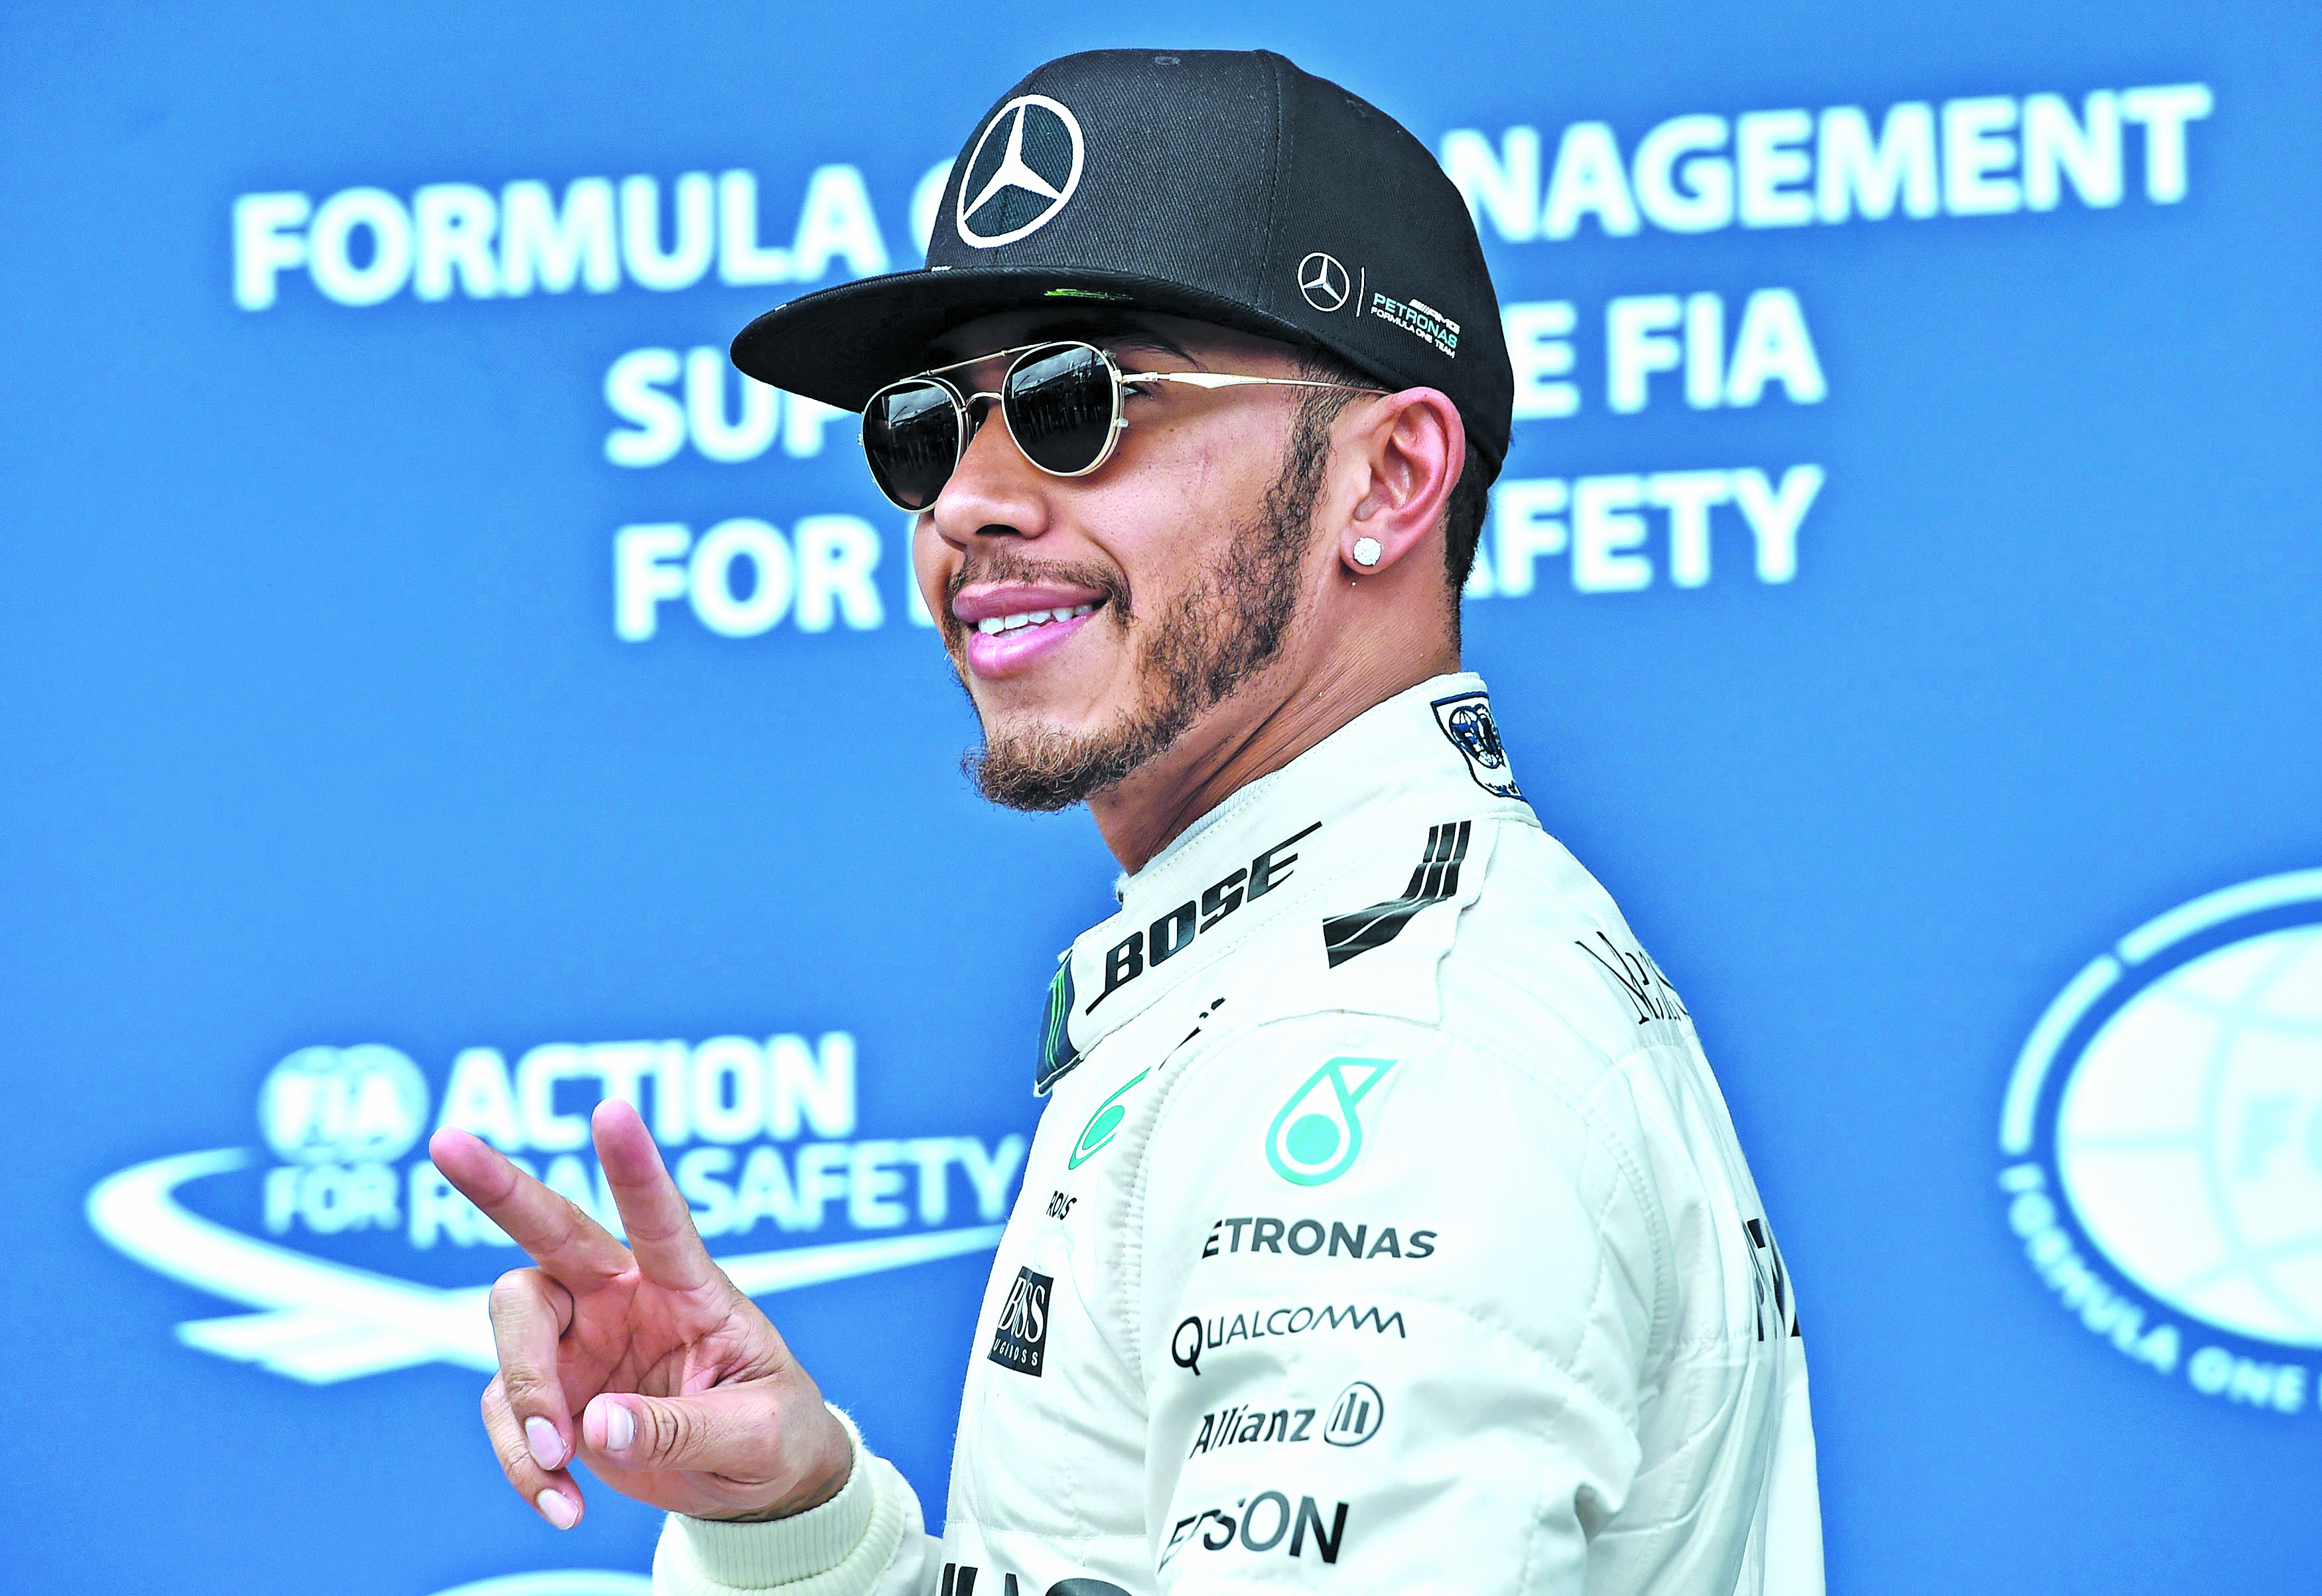 Hamilton on pole as new qualifying flops at Australian Grand Prix